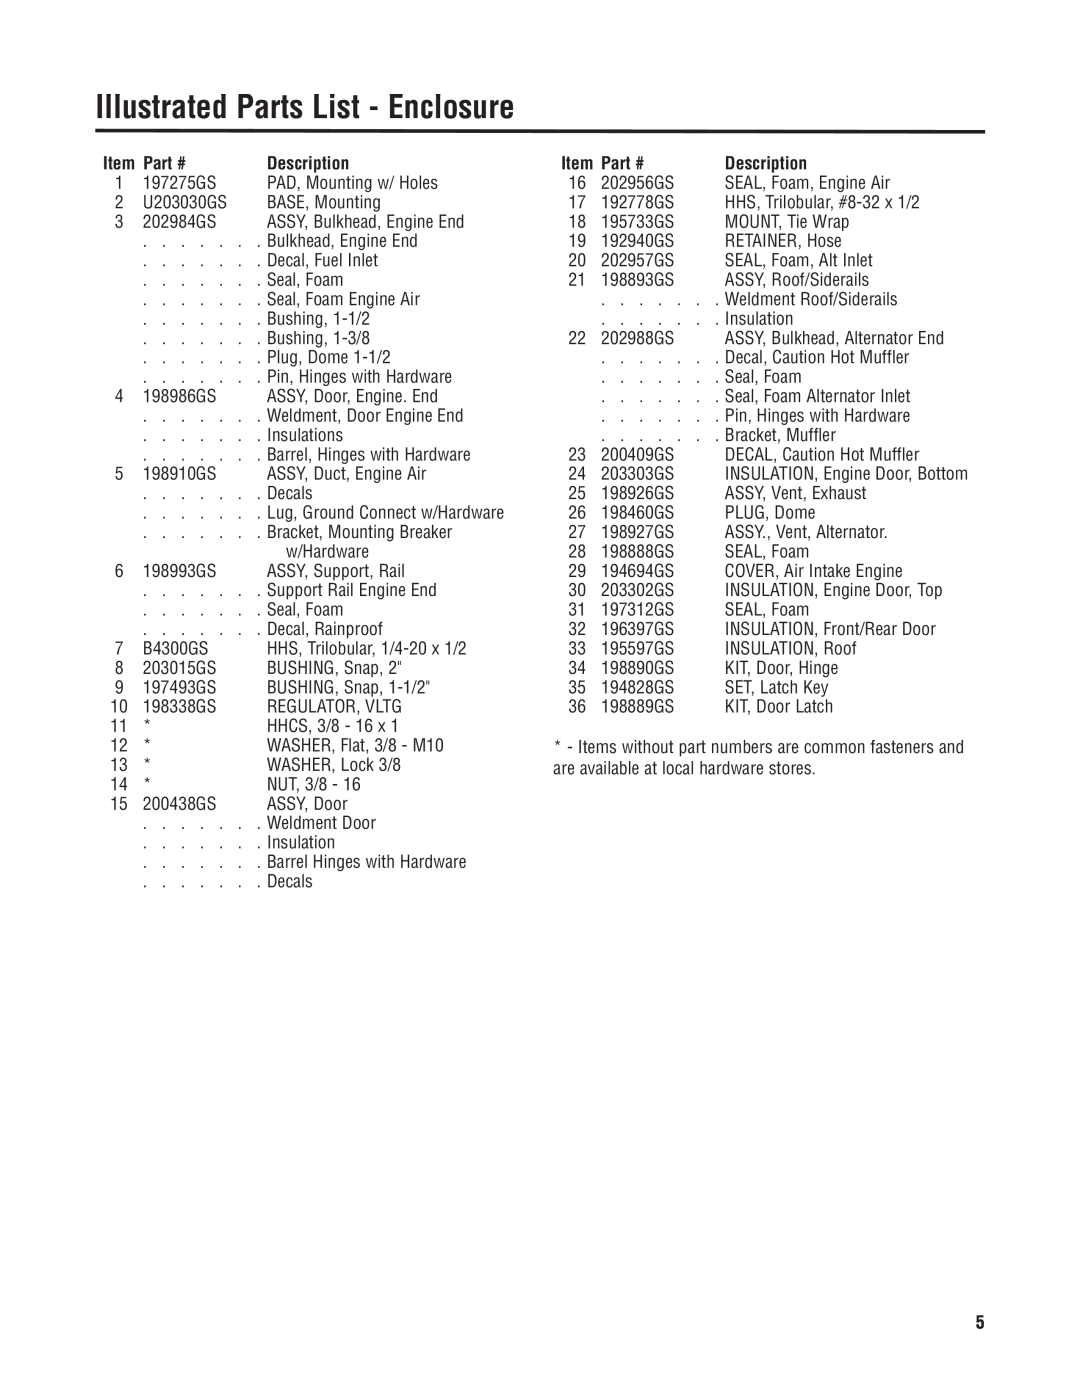 Briggs & Stratton 040226-1 manual Illustrated Parts List - Enclosure, Description 